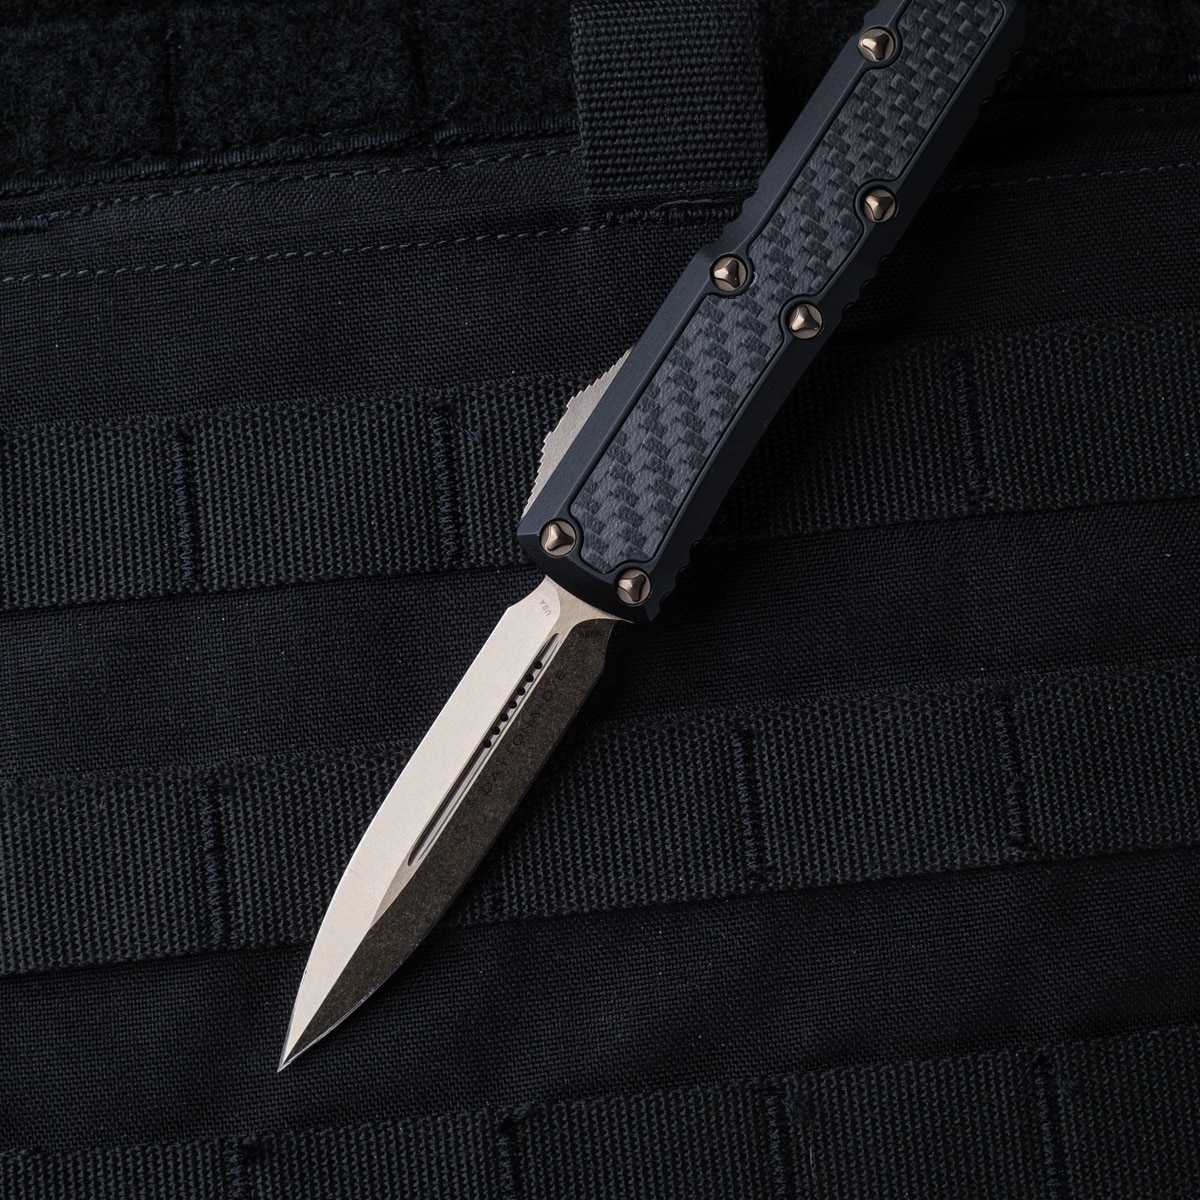 https://cityarsenal.com/product/microtech-daytona-signature-series-o-t-f-auto-knife-d-e-bronzed-standard-blade-black-handles-with-carbon-fiber-inlays-126-13cfis/